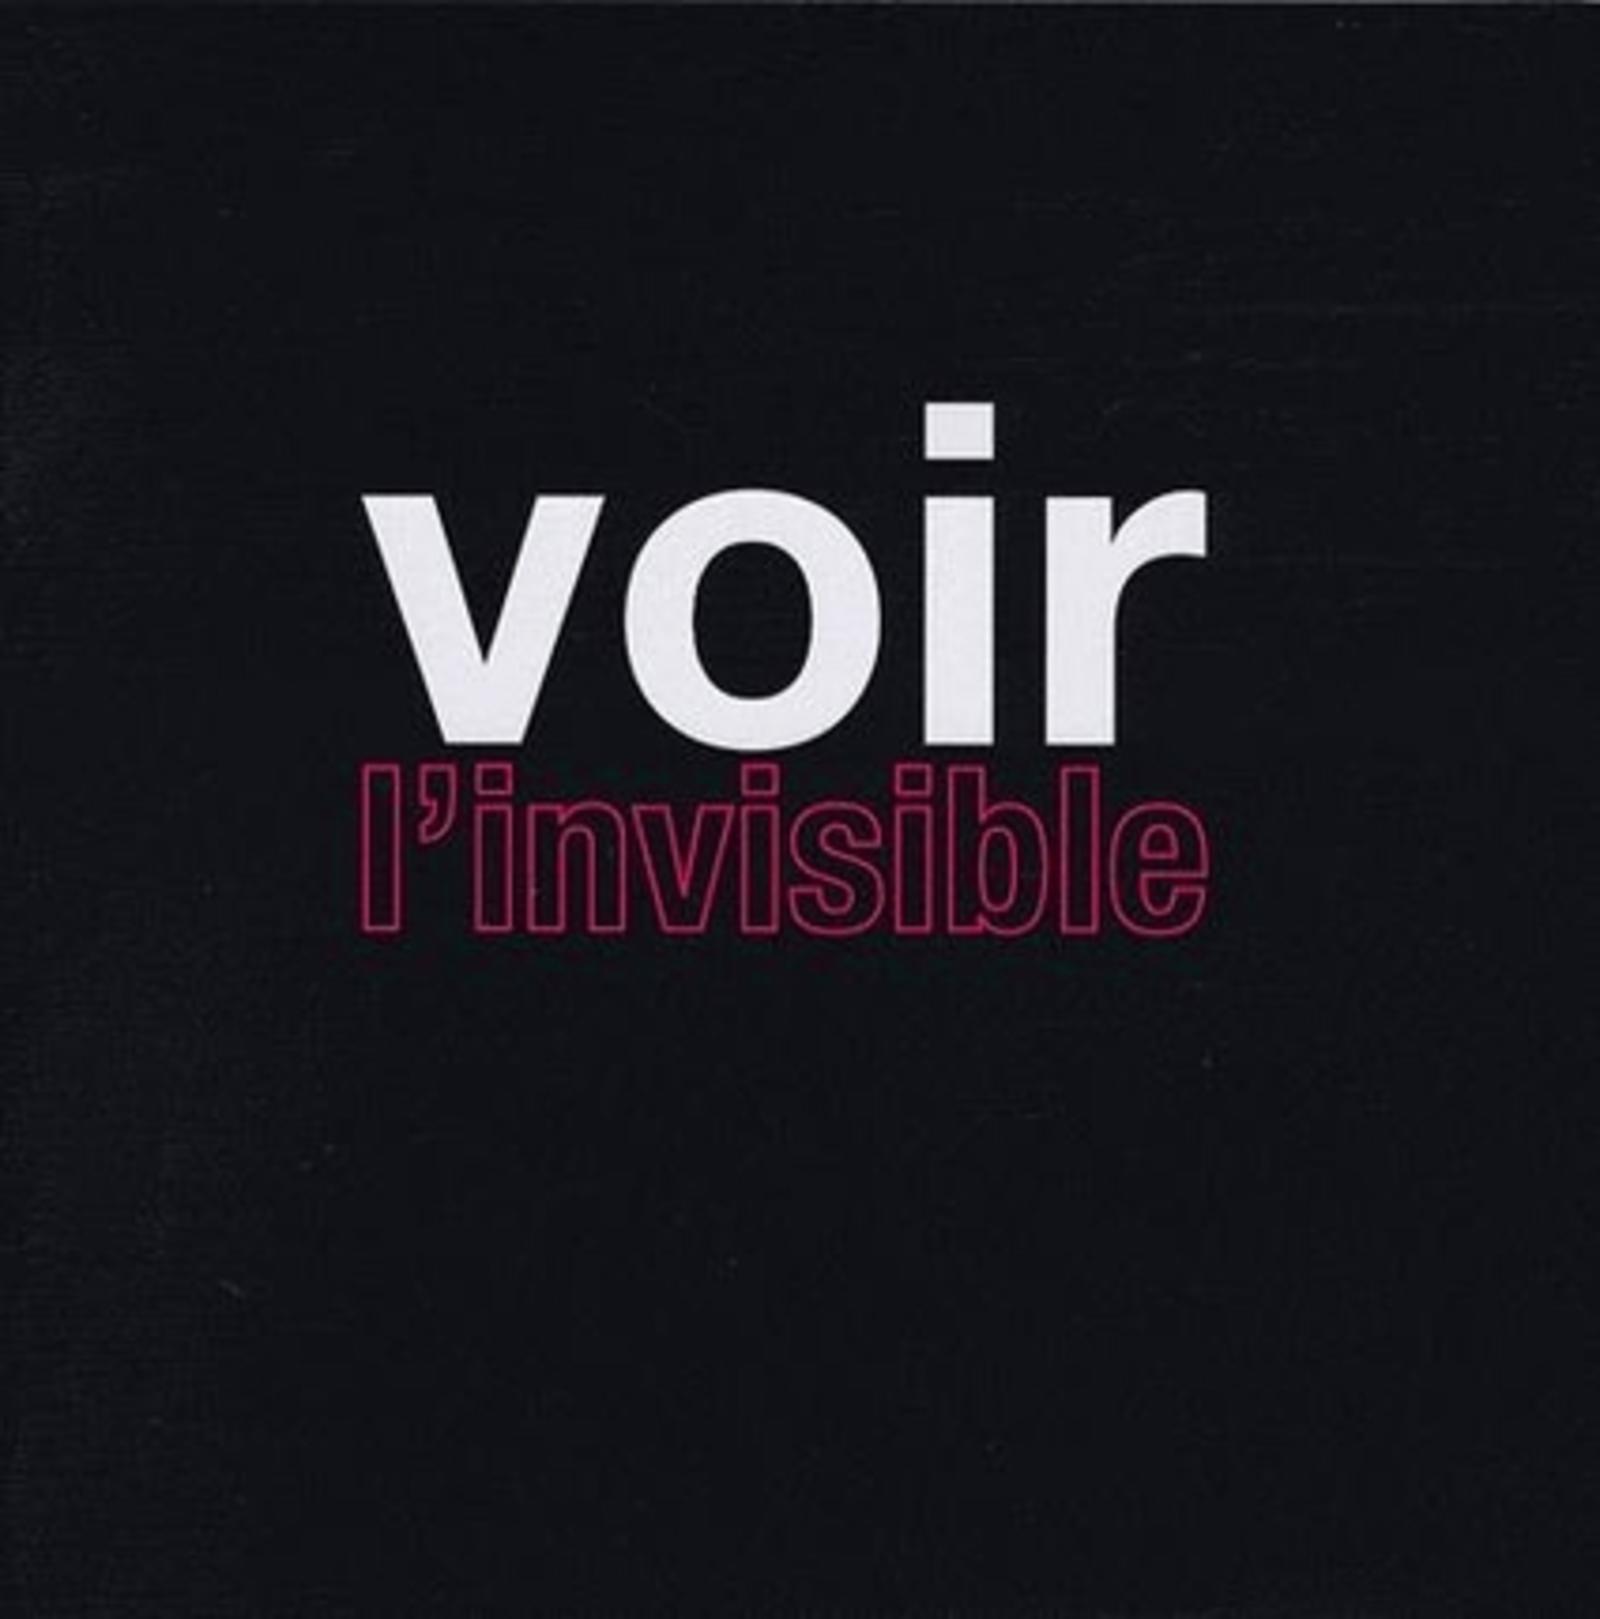 Voir l'invisible (9782916097138-front-cover)